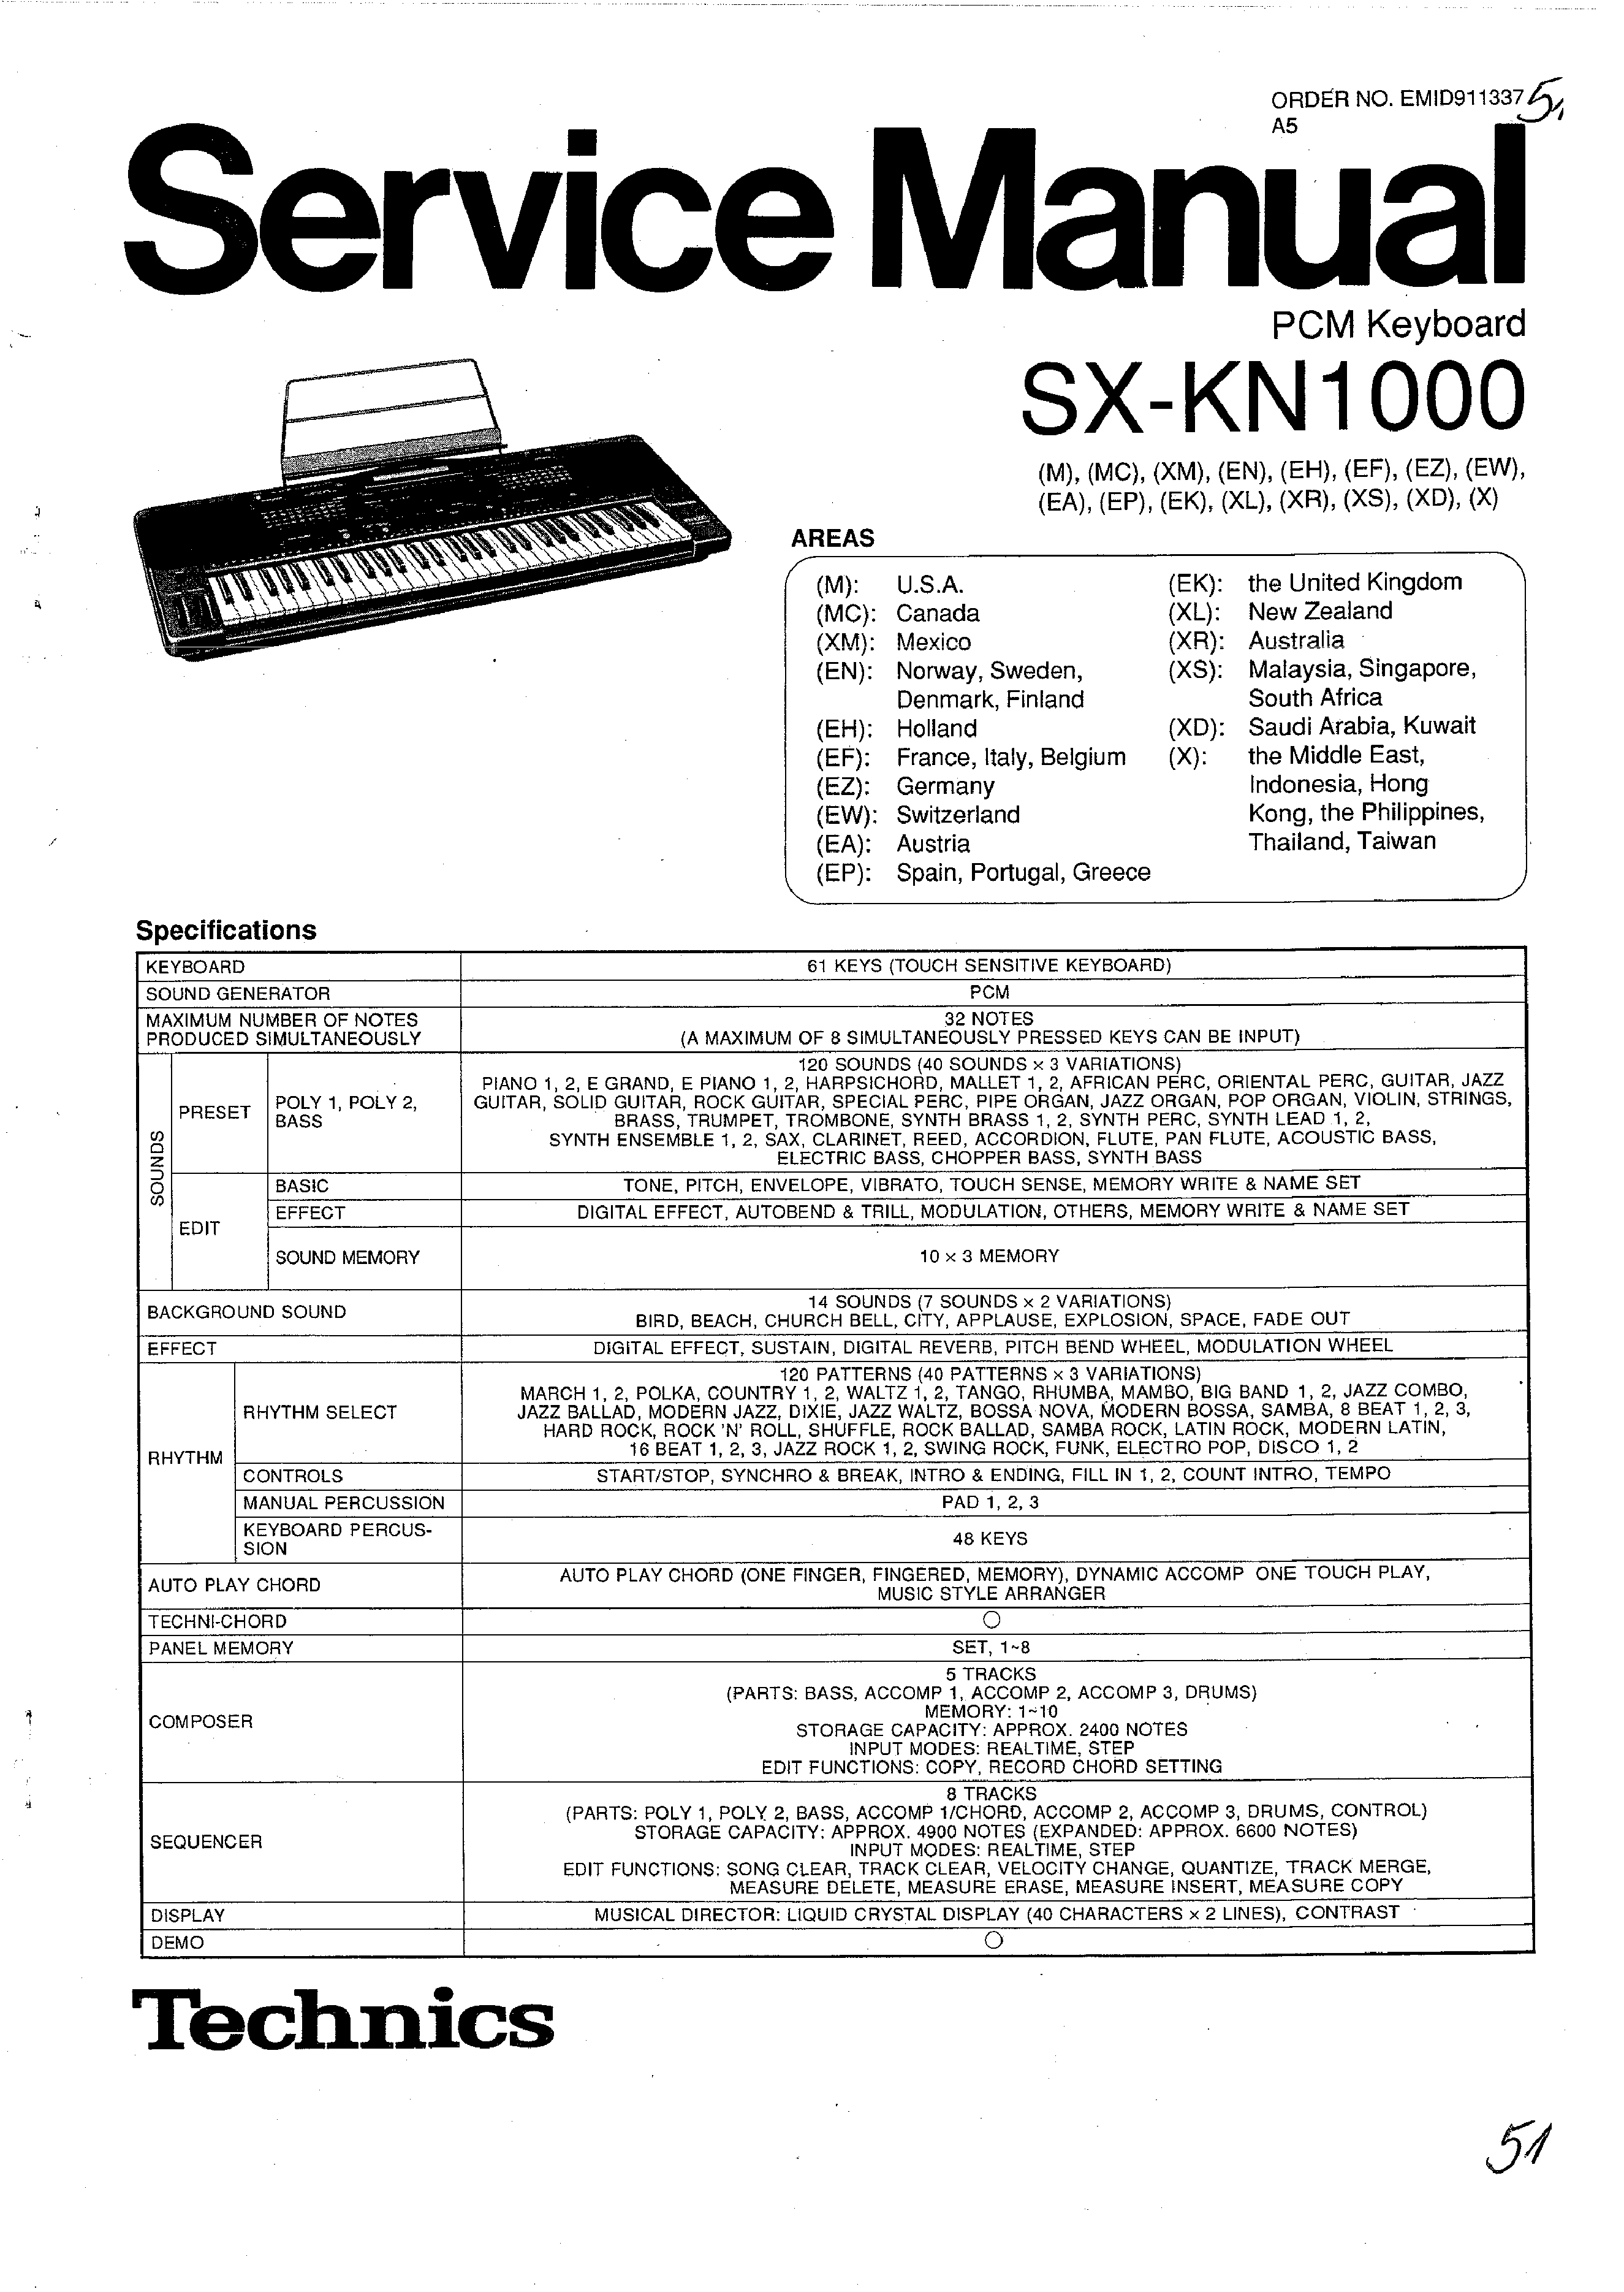 Service Manual for TECHNICS SX-KN1000 - Download